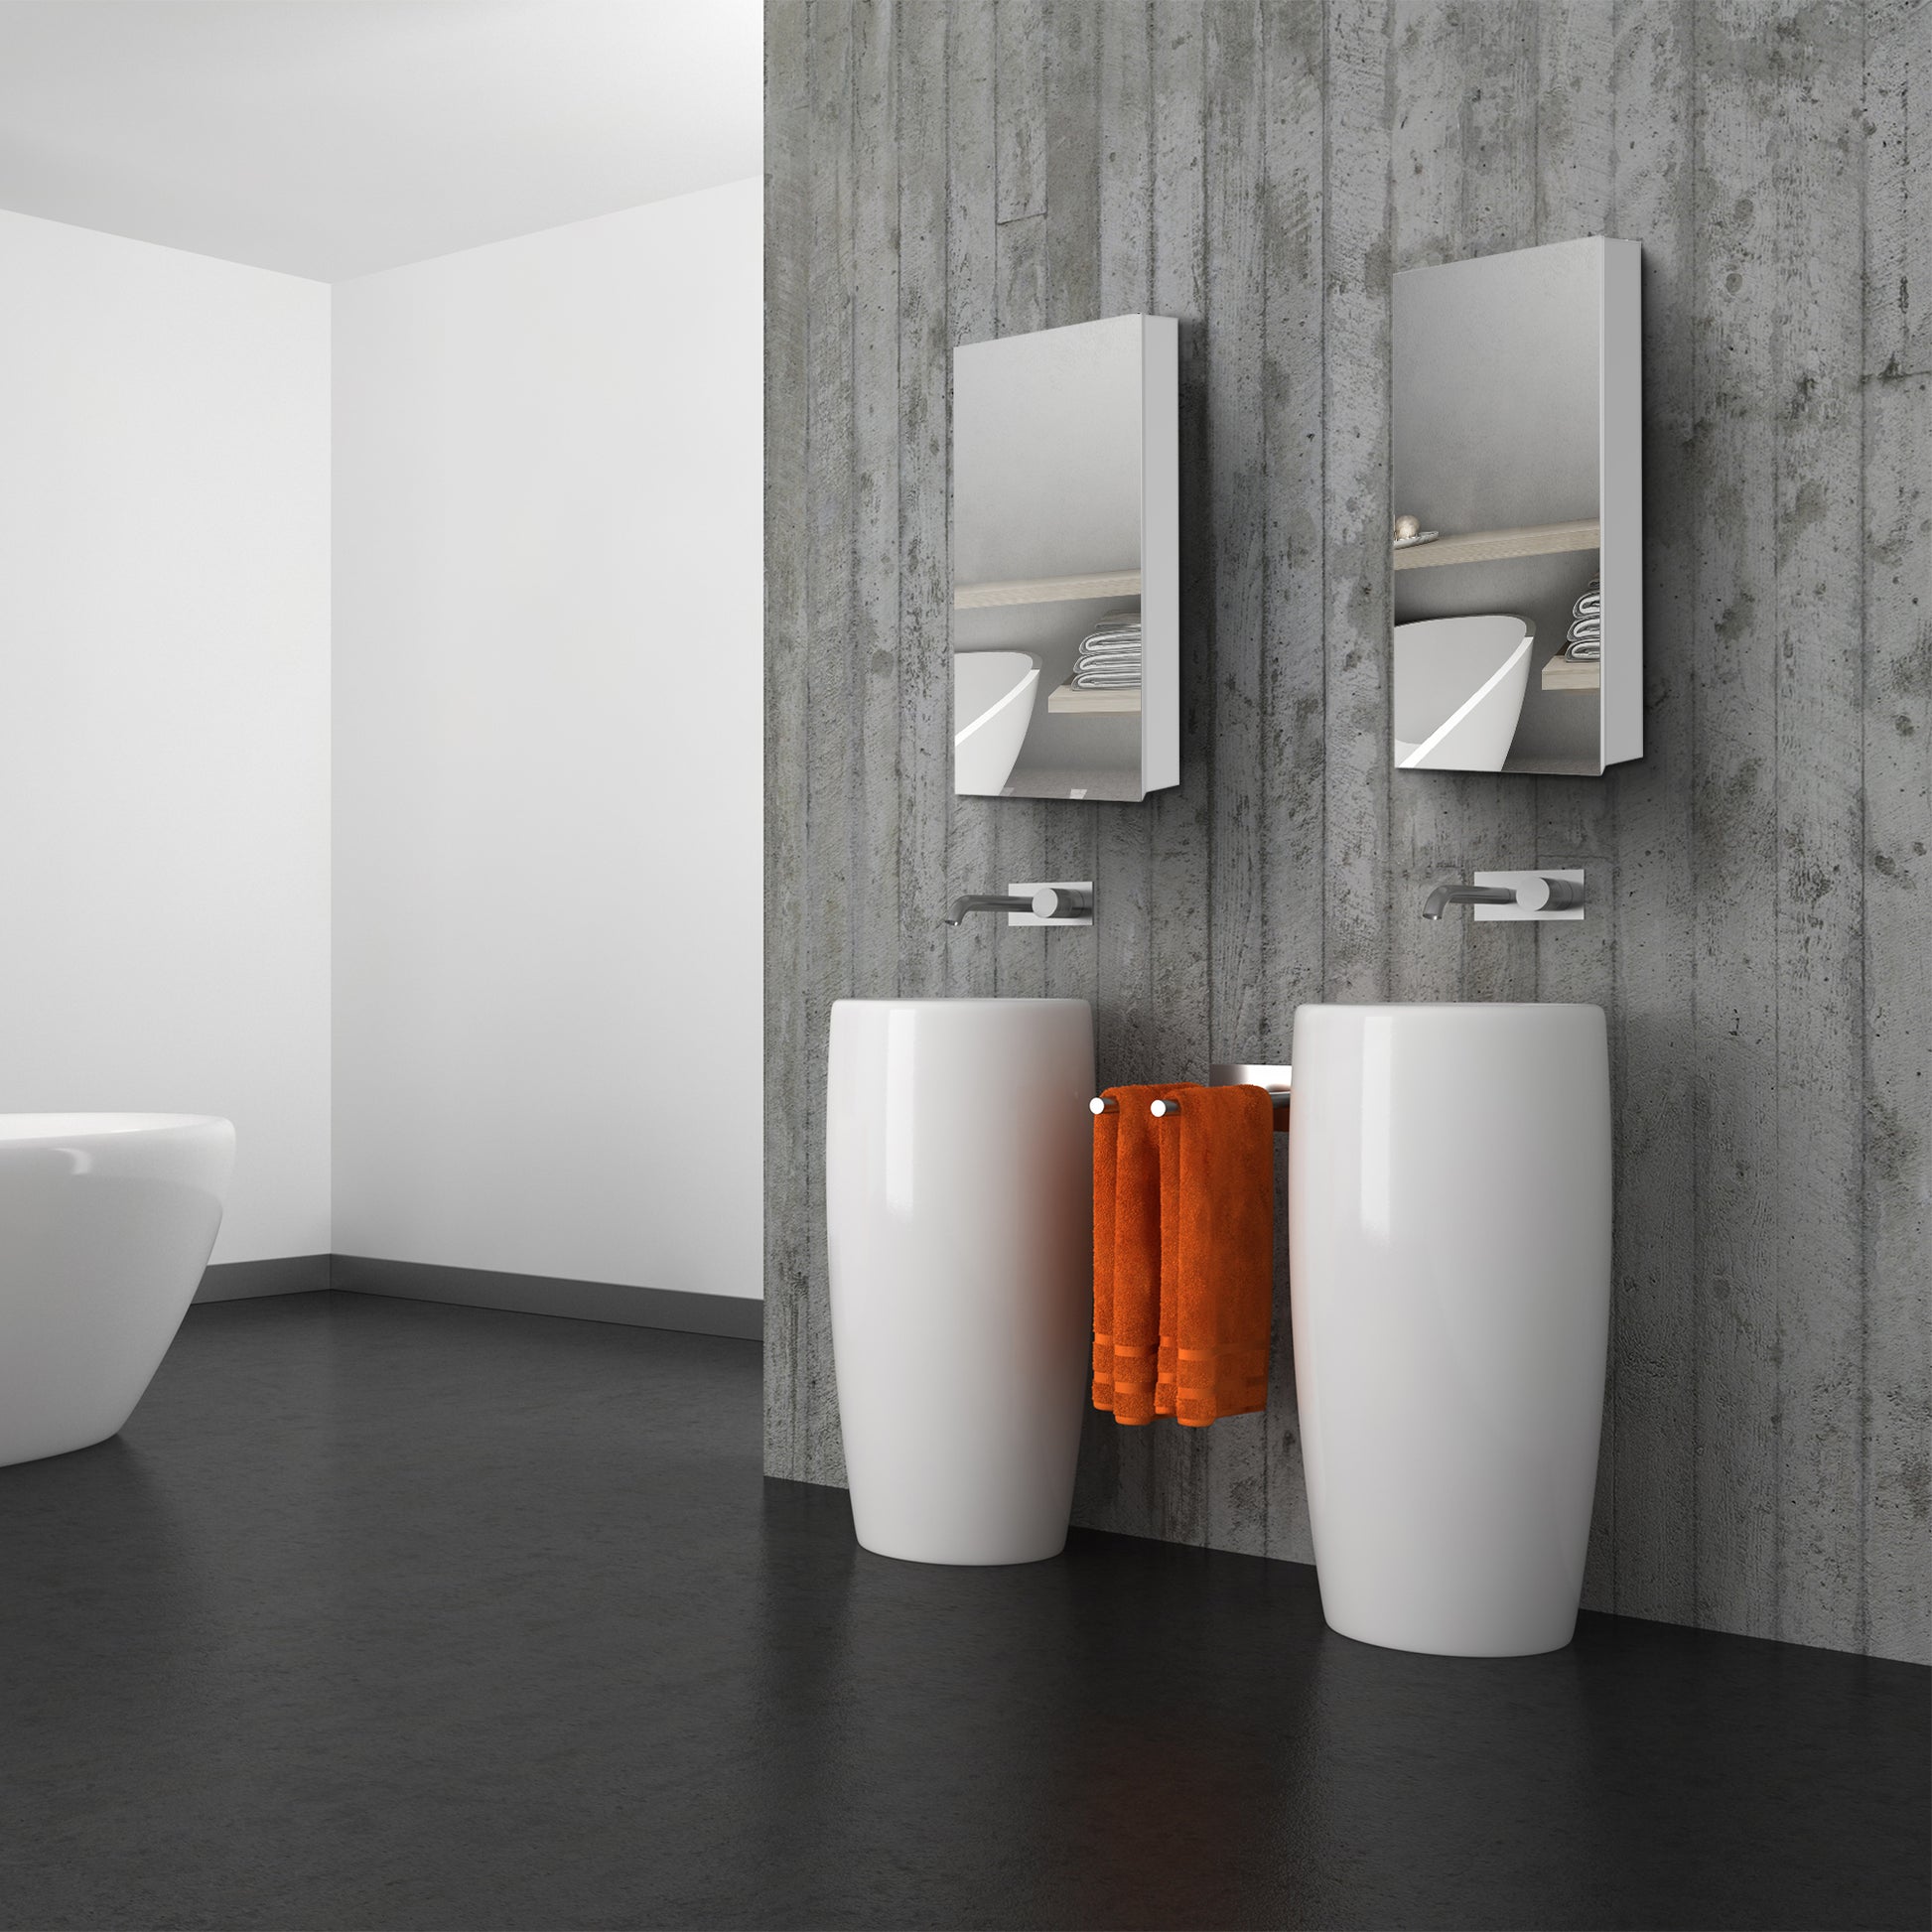 15" W x 30" H Single Door Bathroom Medicine Cabinet white-engineered wood